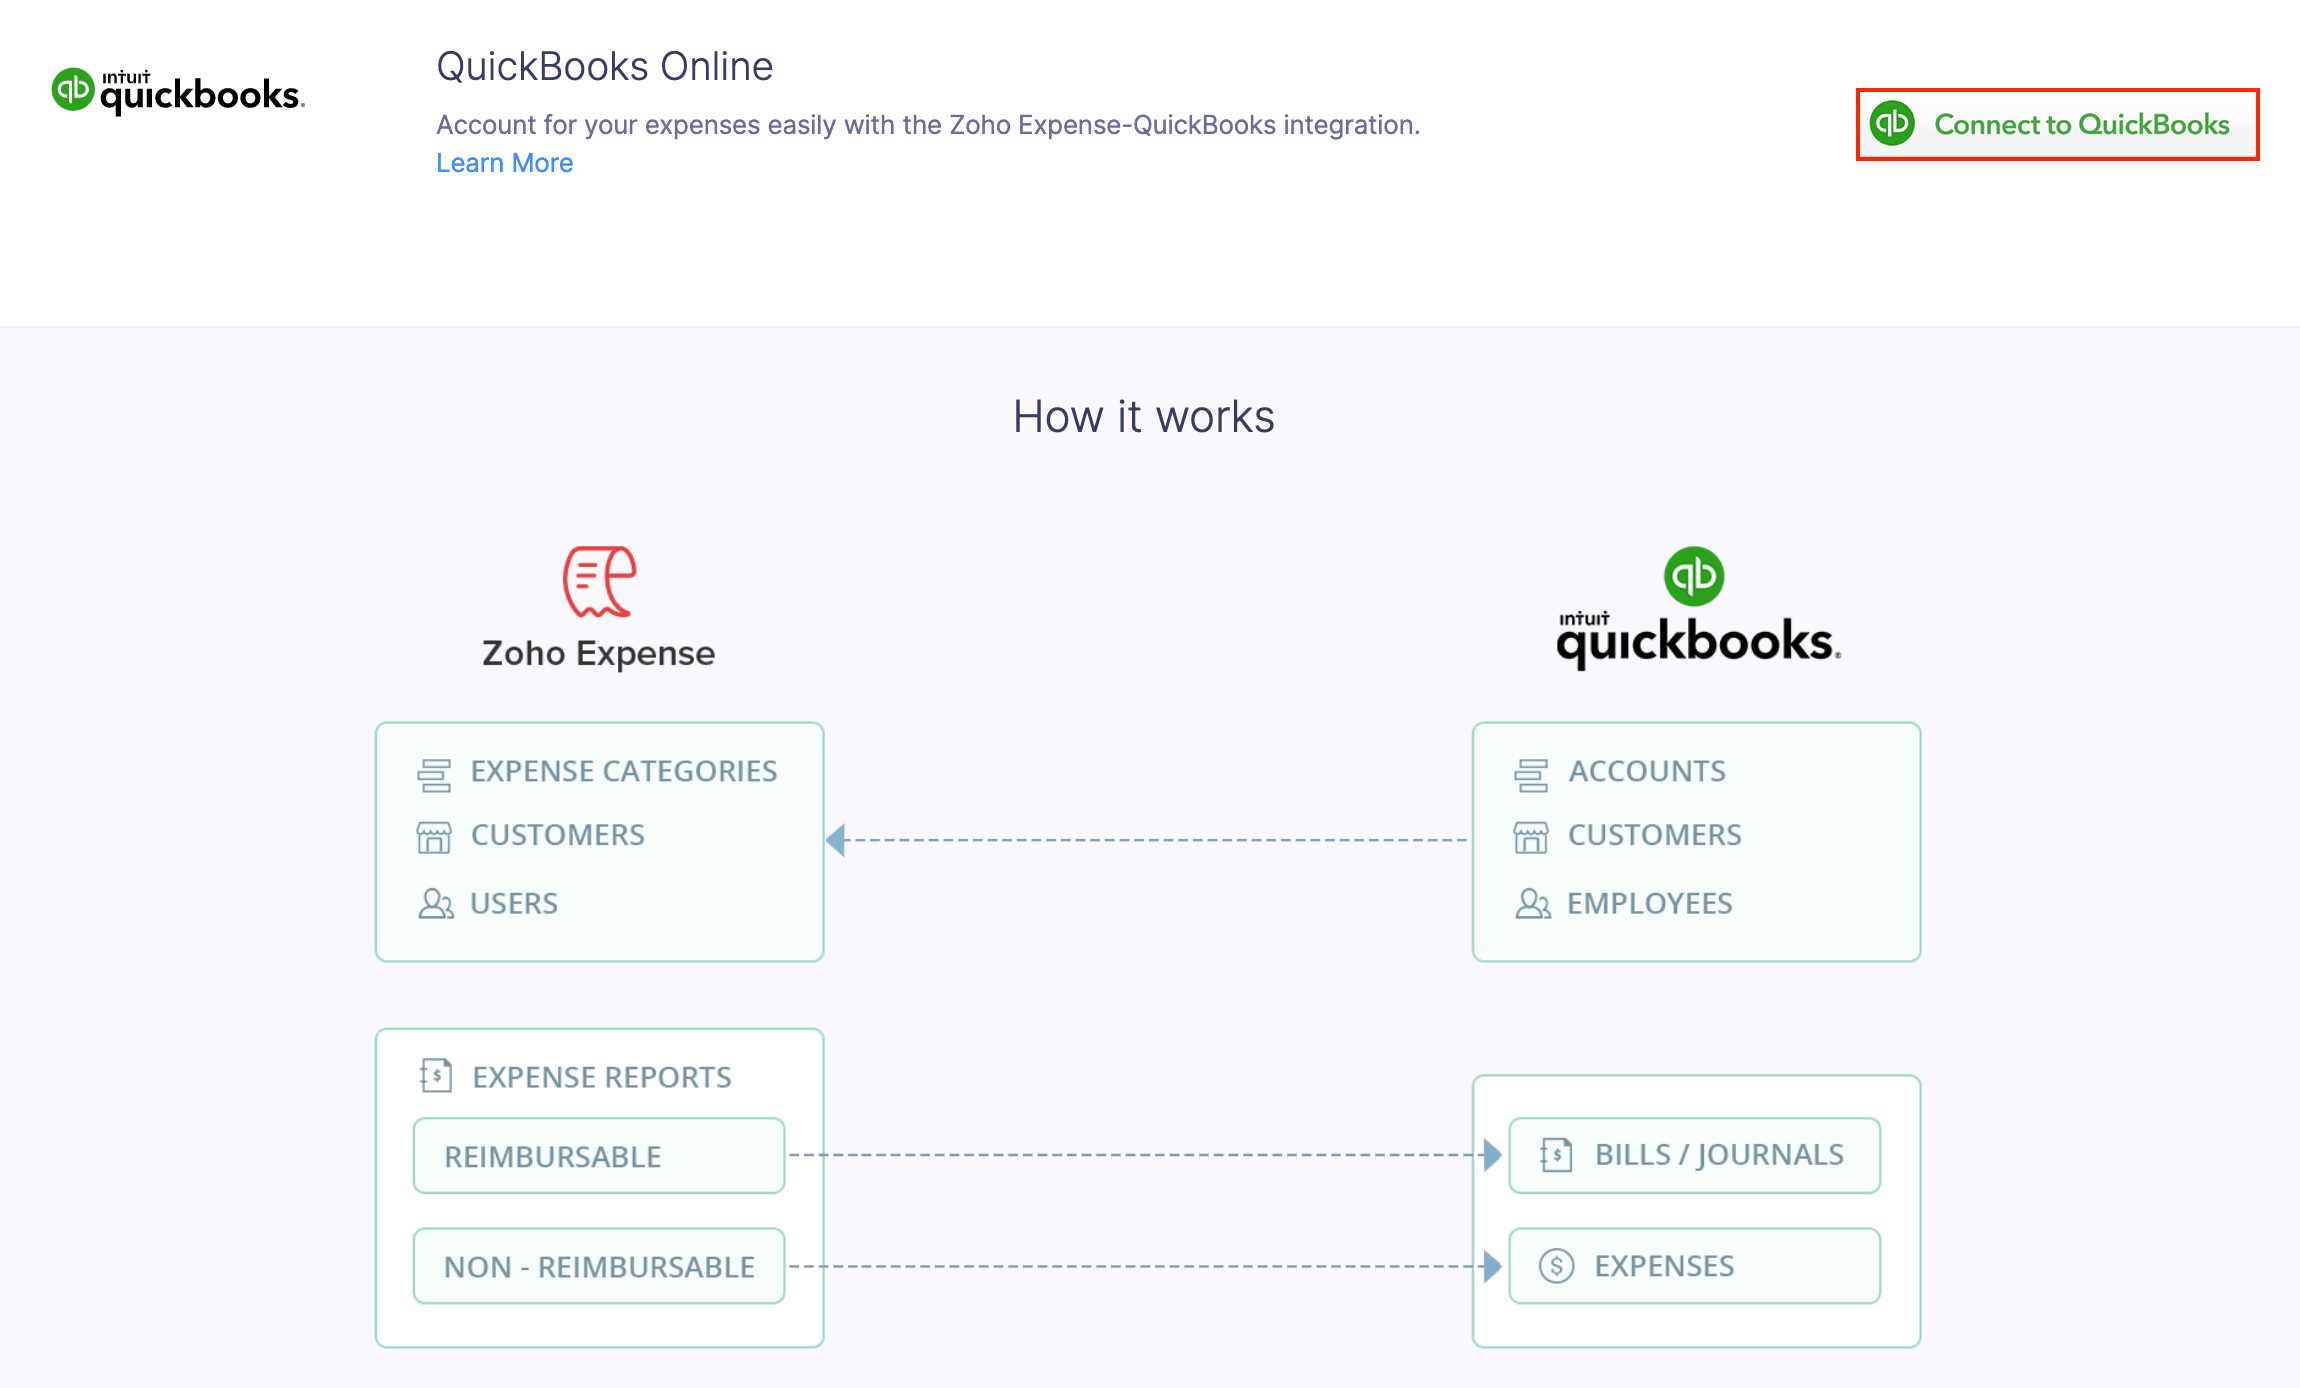 Authorize Access to QuickBooks Online